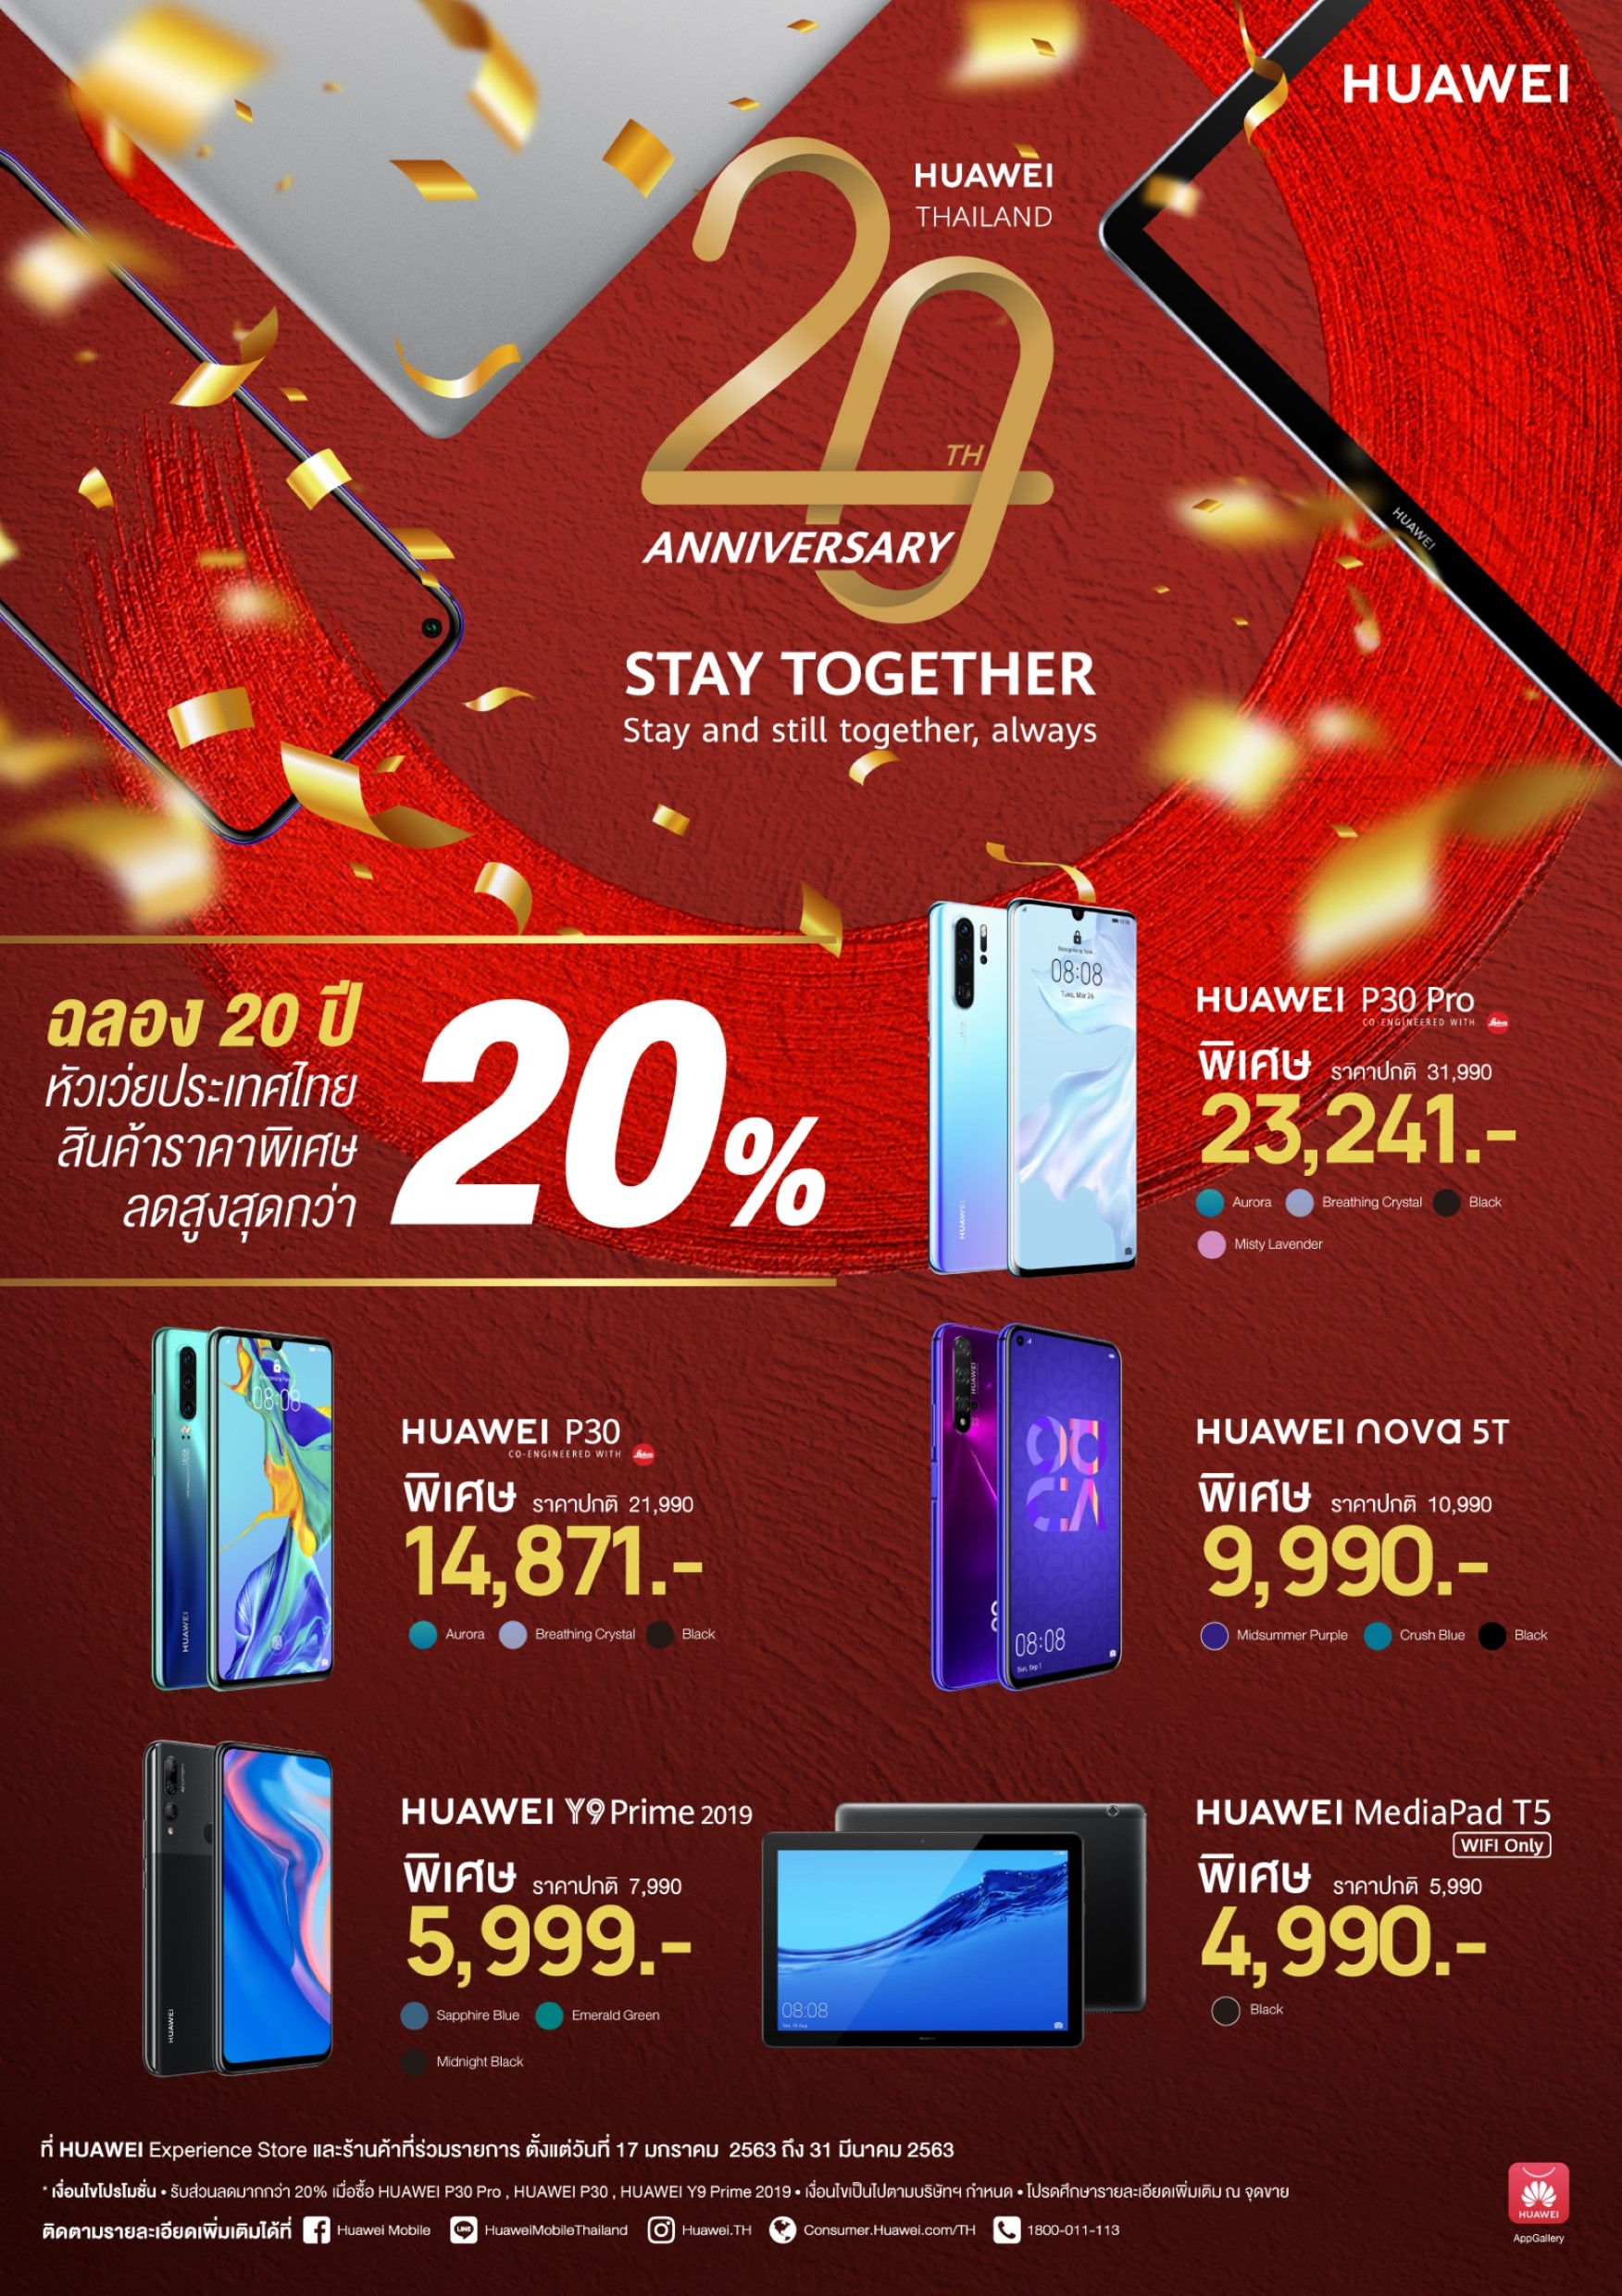 Huawei Thailand 20th Anniversary